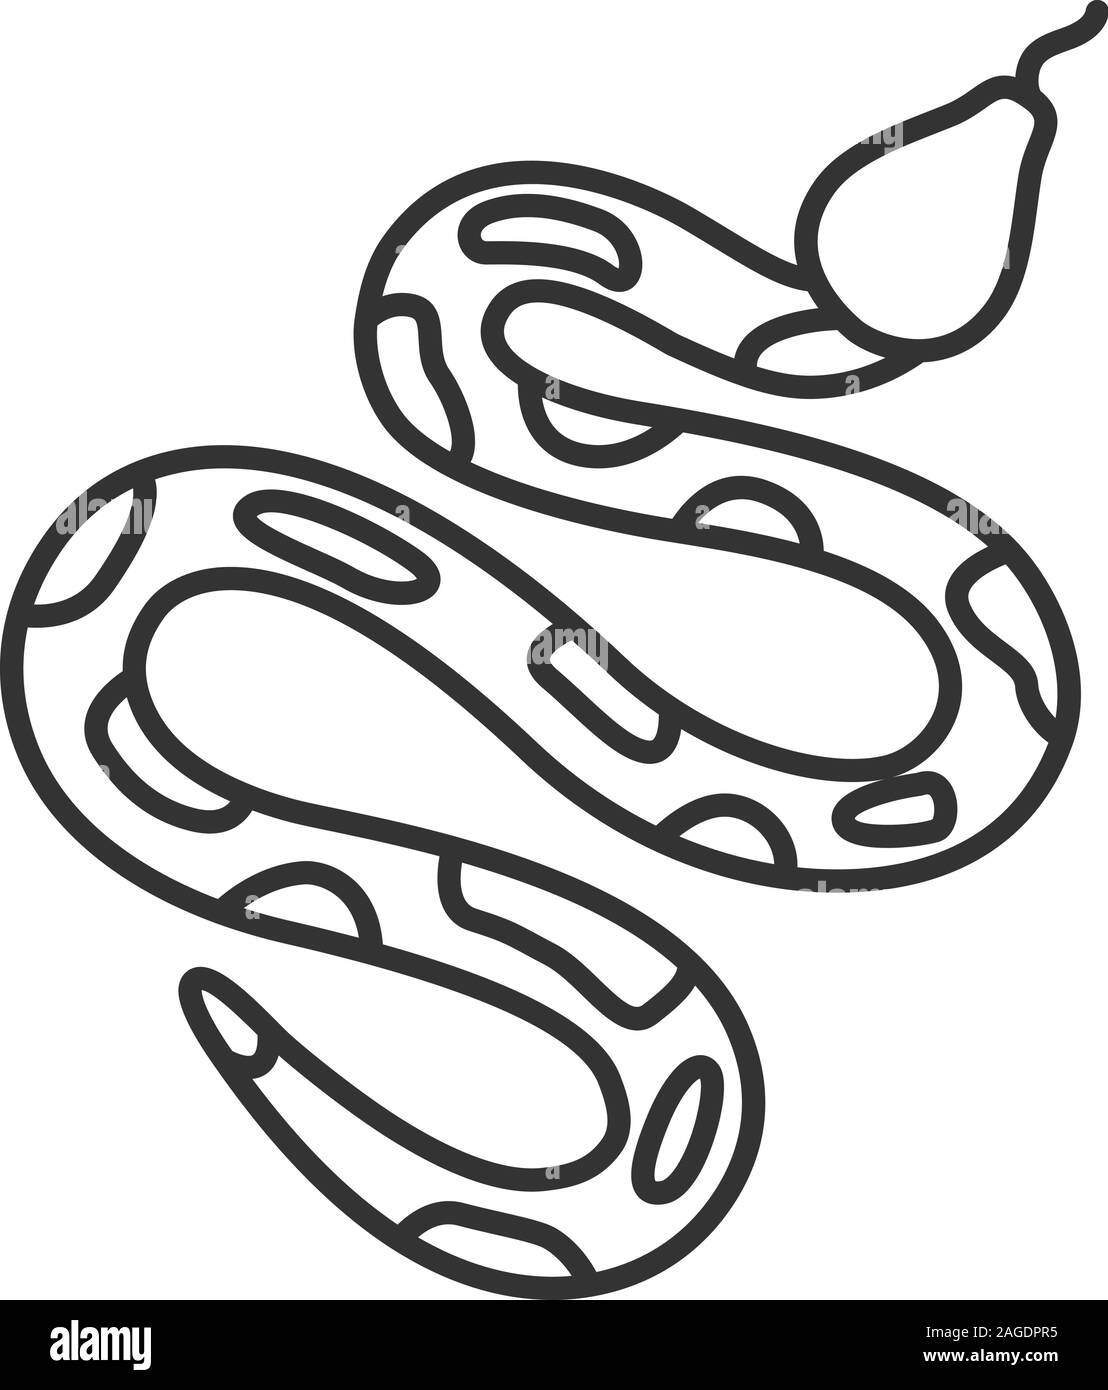 Burmese Python Sketch by lol20 on DeviantArt